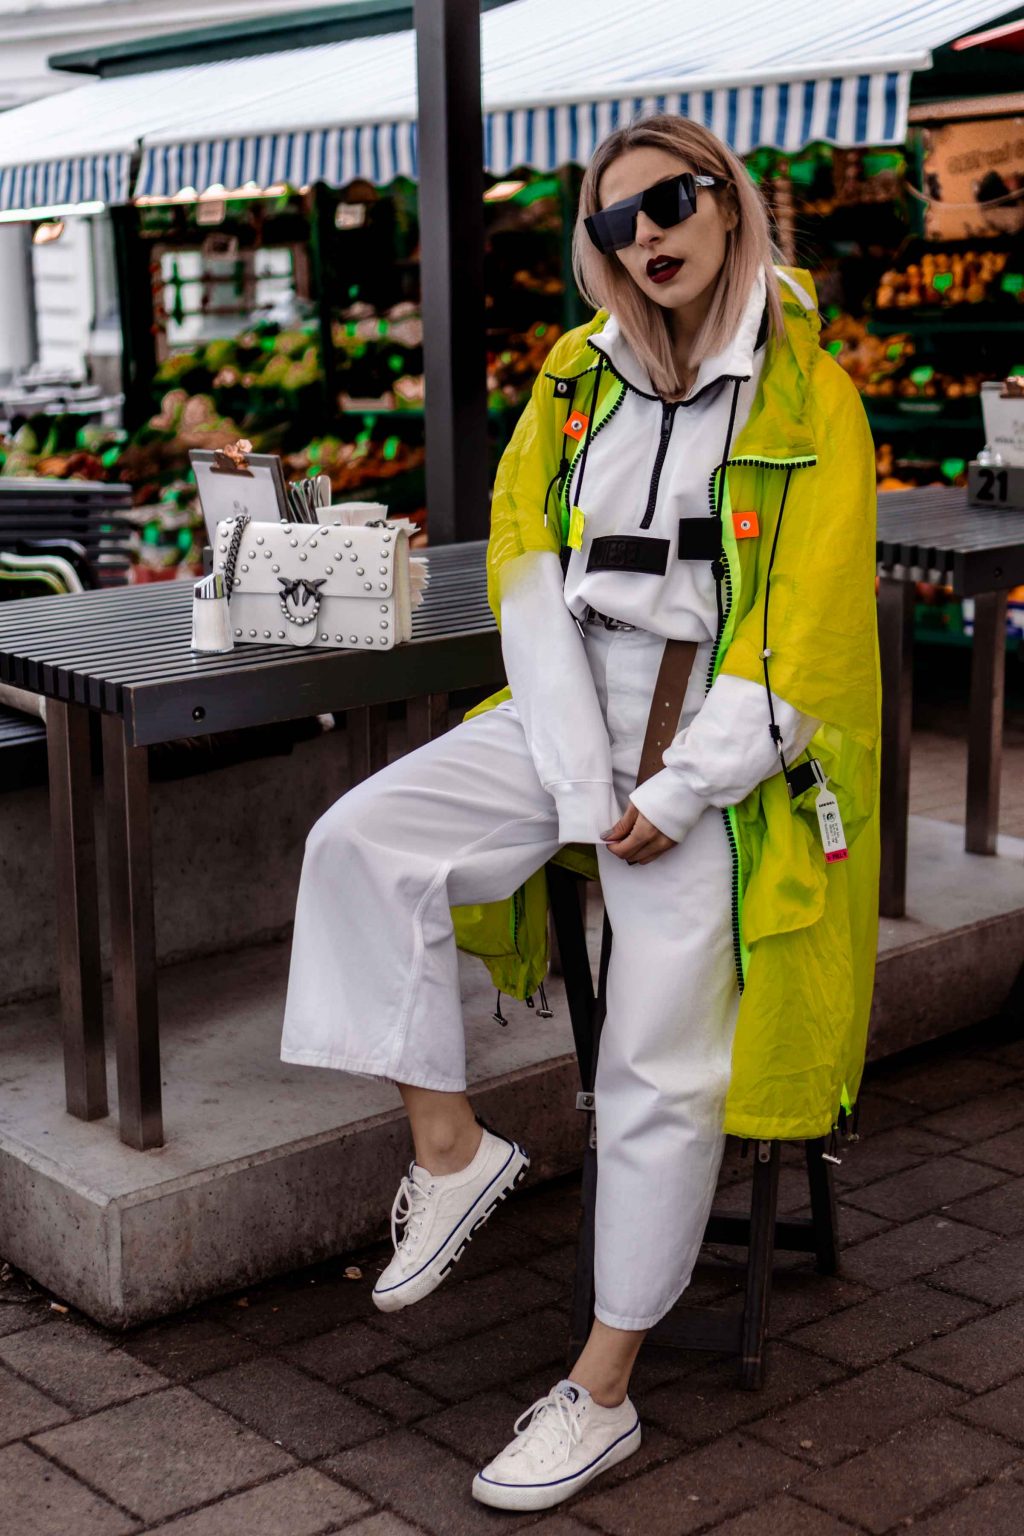 Neon raincoats Trend 2019